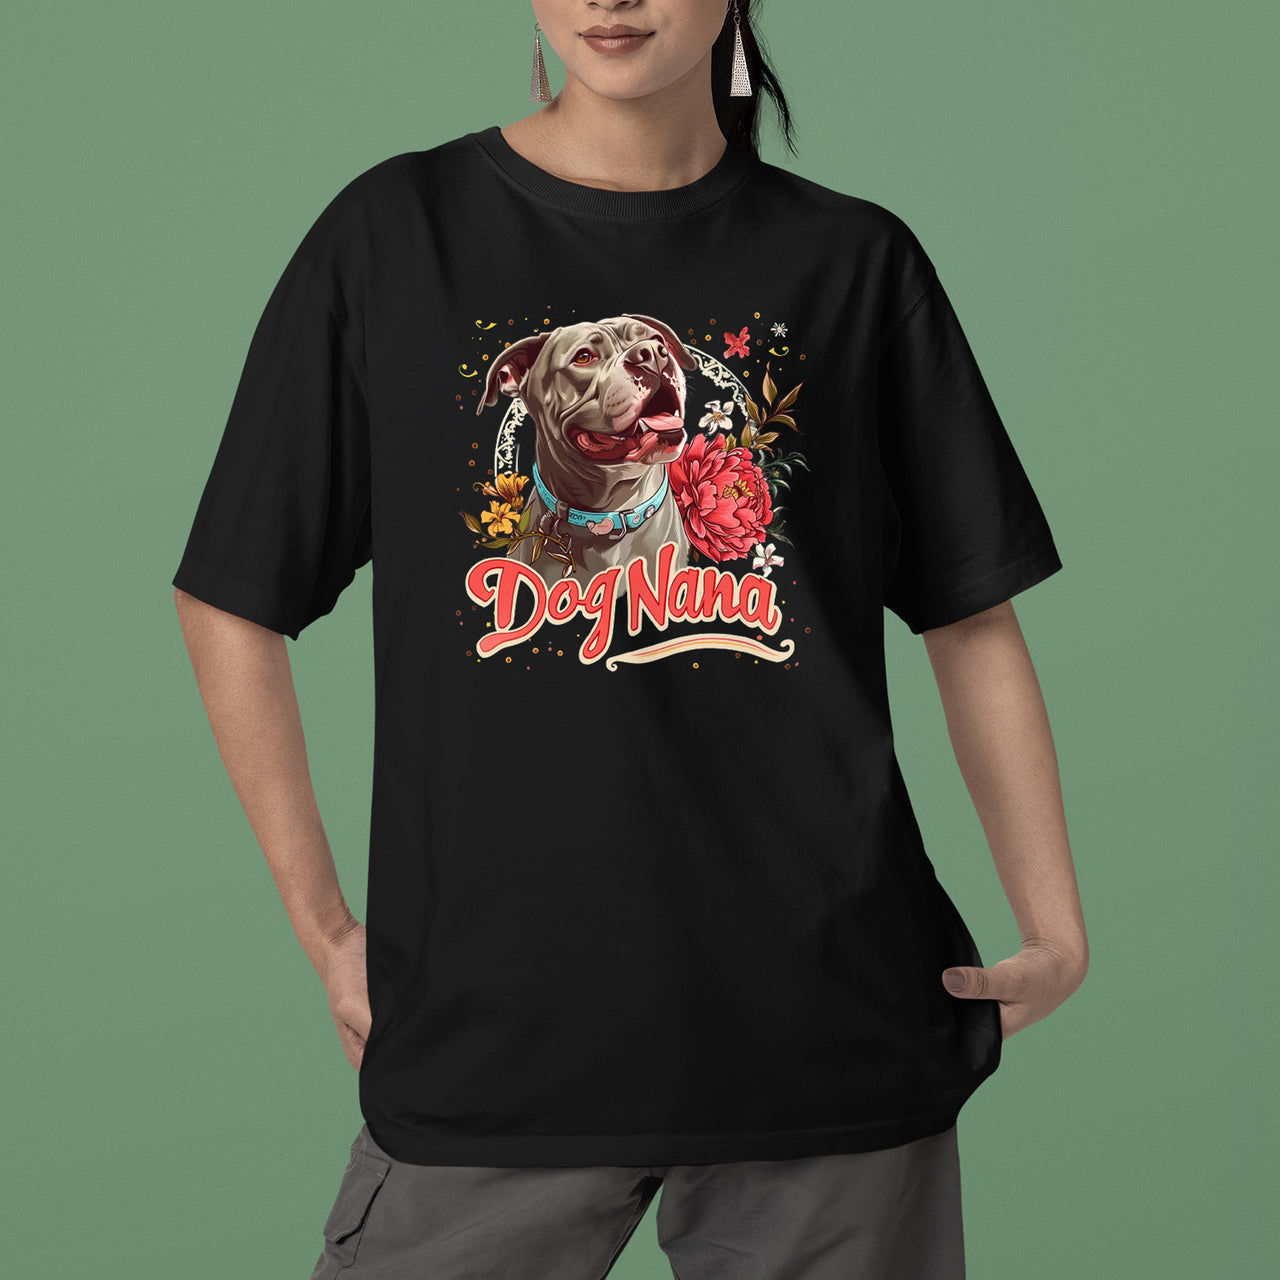 Pit Pull Dog T-shirt, Pet Lover Shirt, Dog Lover Shirt, Dog Nana  T-Shirt, Dog Owner Shirt, Gift For Dog Grandma, Funny Dog Shirts, Women Dog T-Shirt, Mother's Day Gift, Dog Lover Wife Gifts, Dog Shirt 01